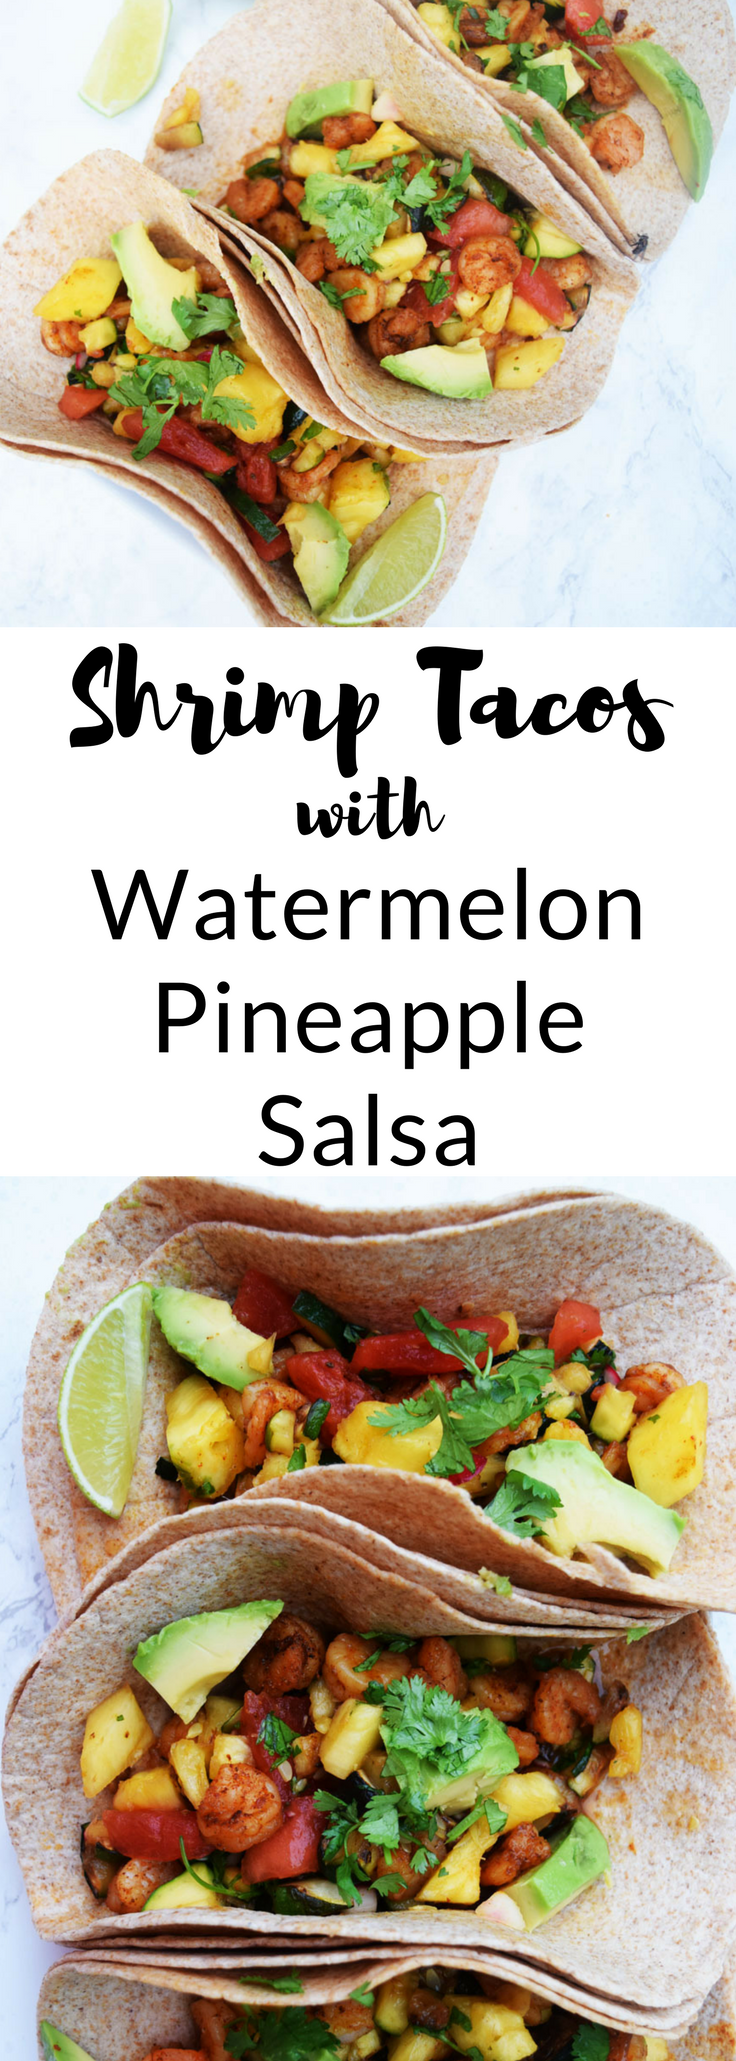 Pinterest graphic for shrimp tacos